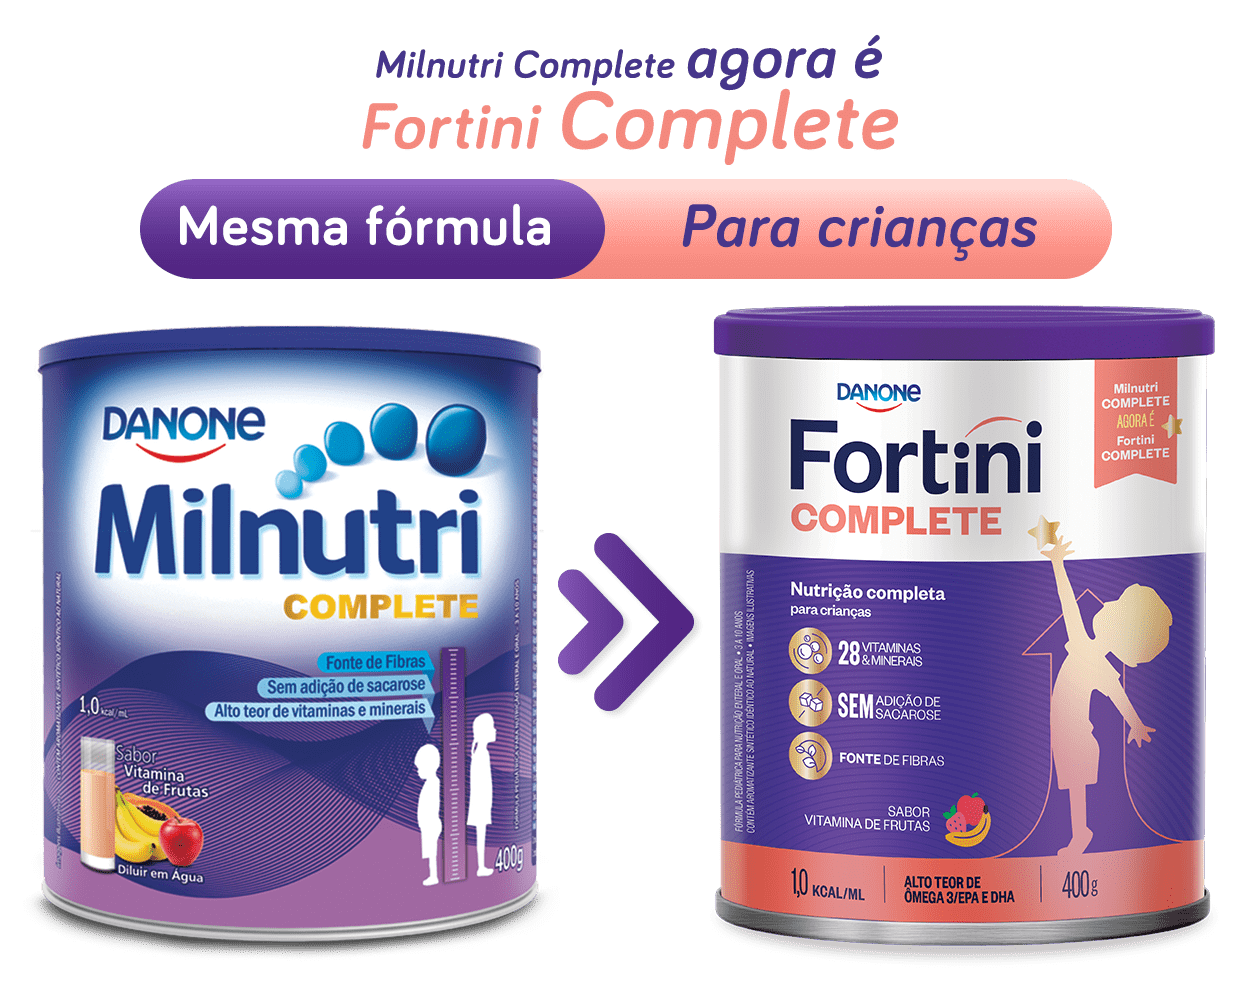 Fortini Complete Vitamina de Frutas 400g